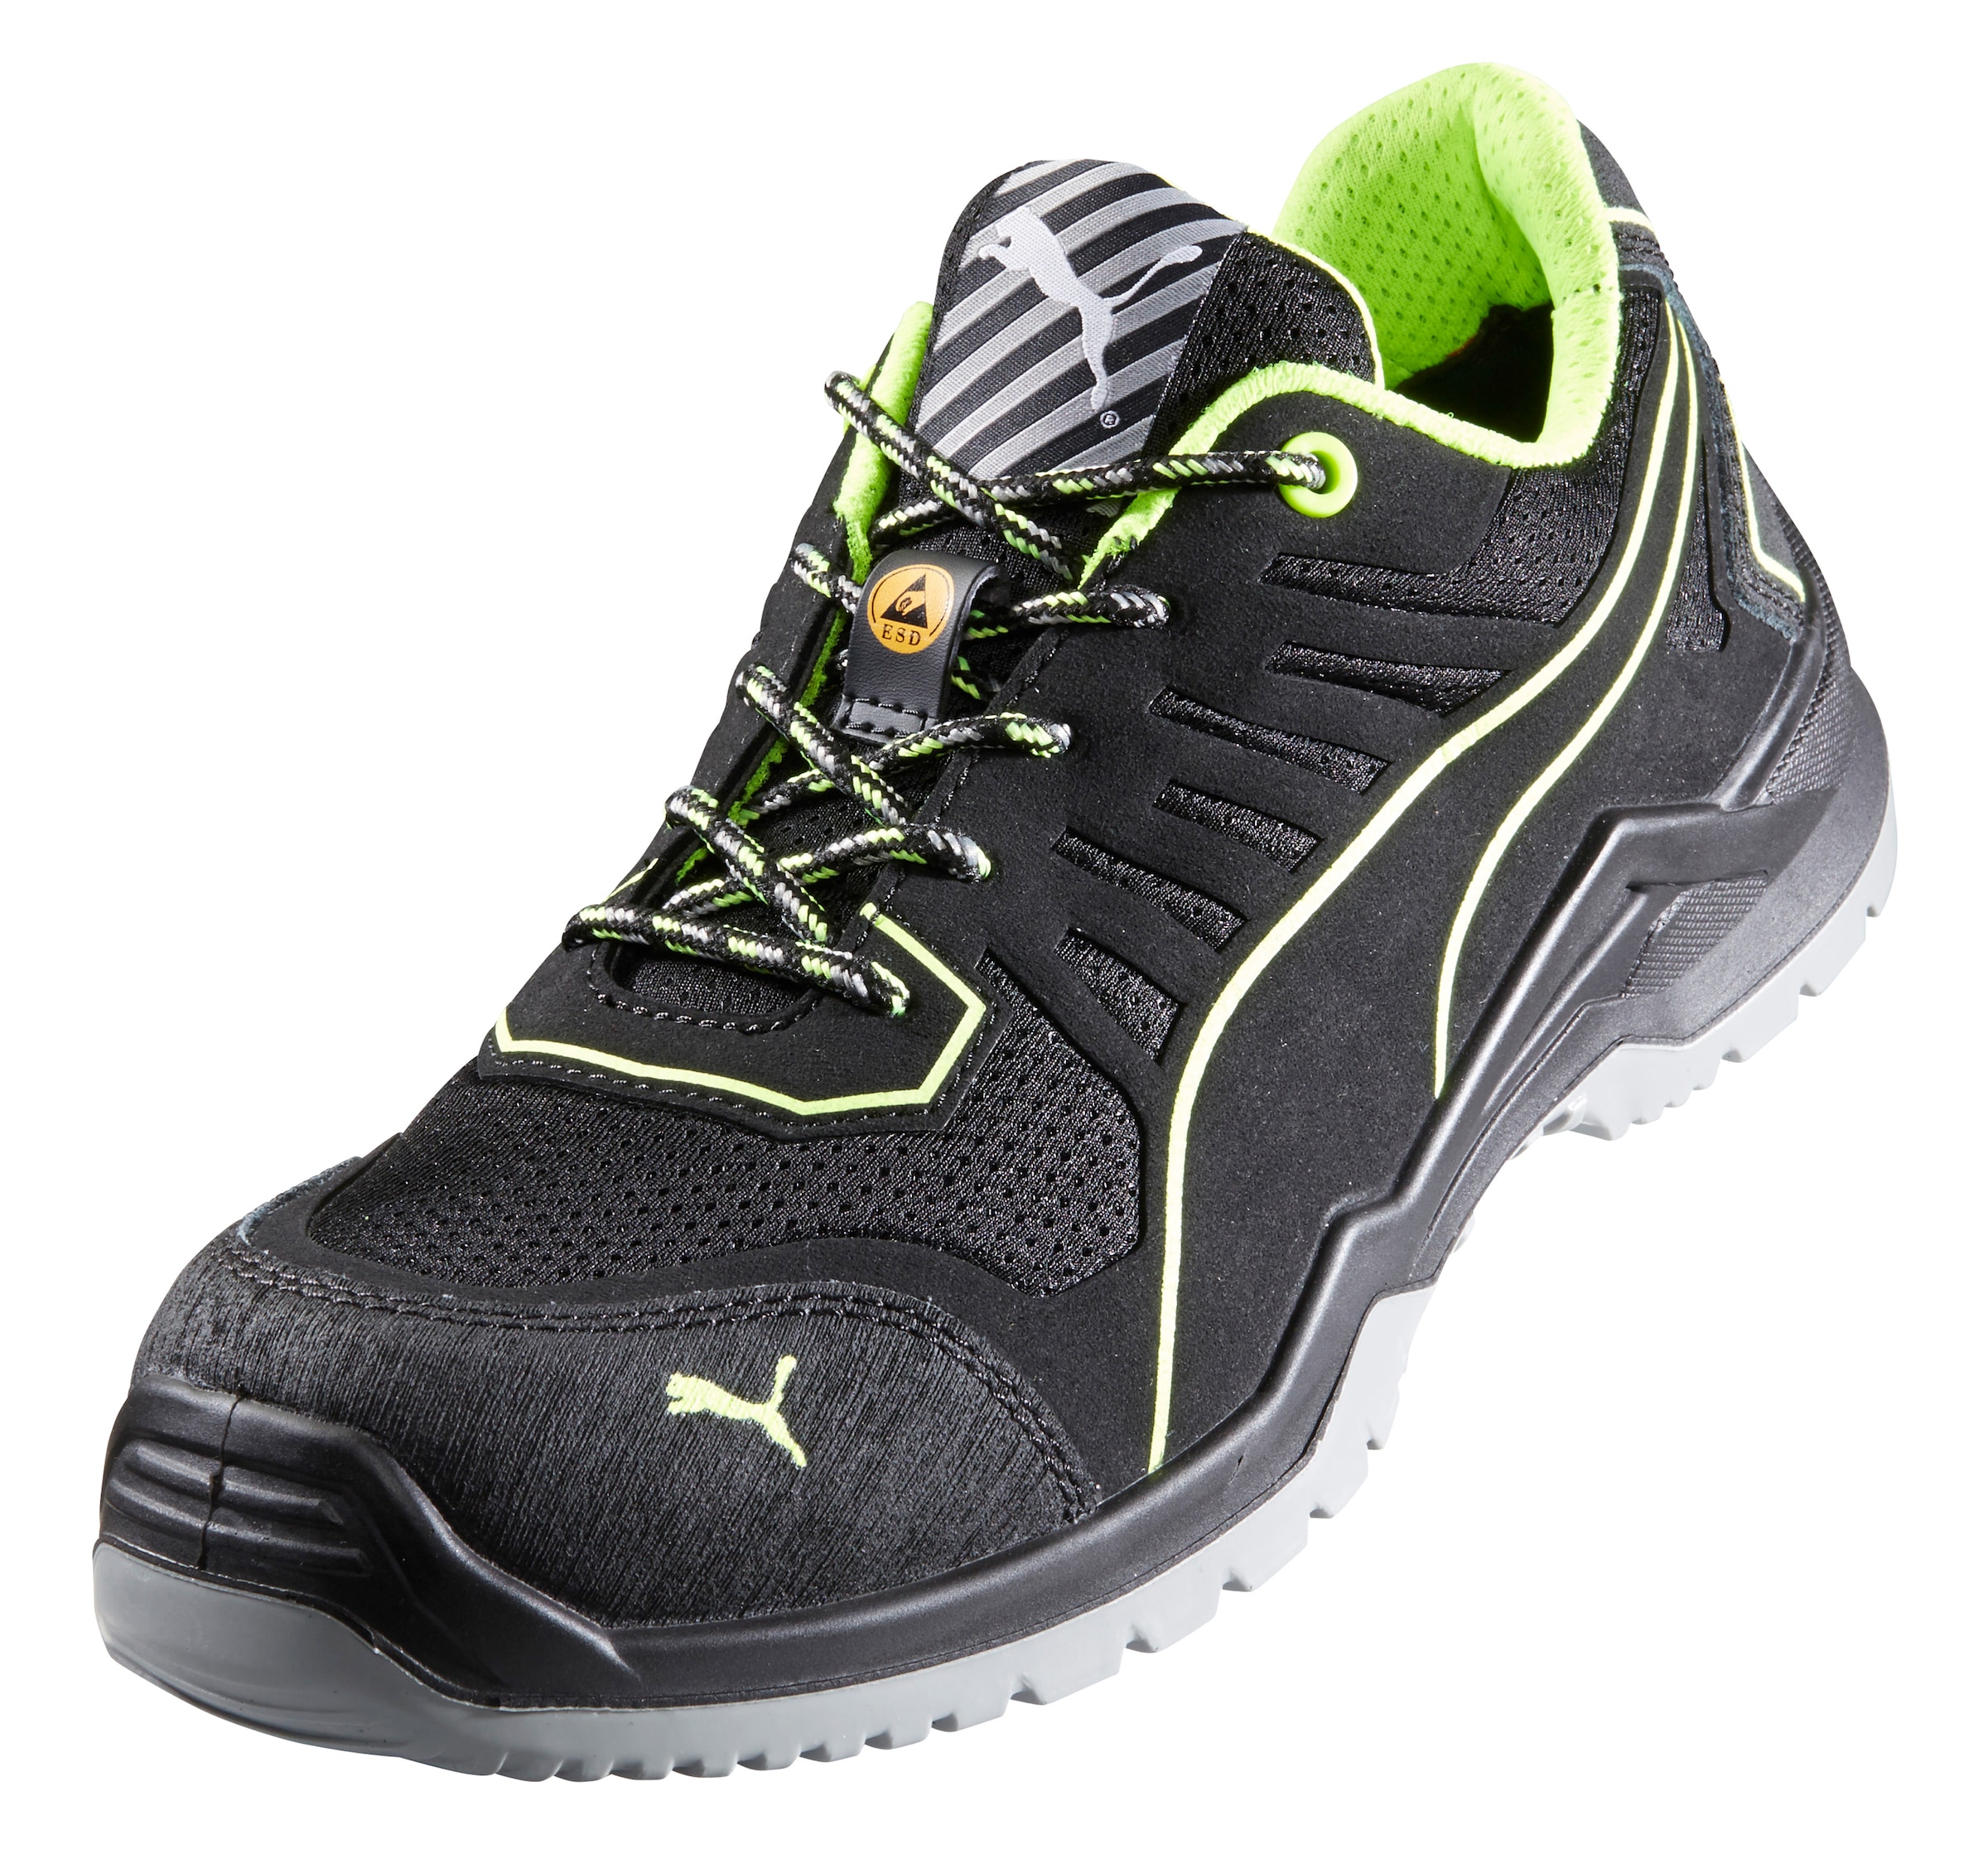 PUMA SAFETY Sicherheitsschuh Schuhe S1P, ESD, Evercushion BA Fußbett, BreathActive Funktionsfutter Gr. 44, schwarz (schwarz, grün) Sicherheitsschuhe